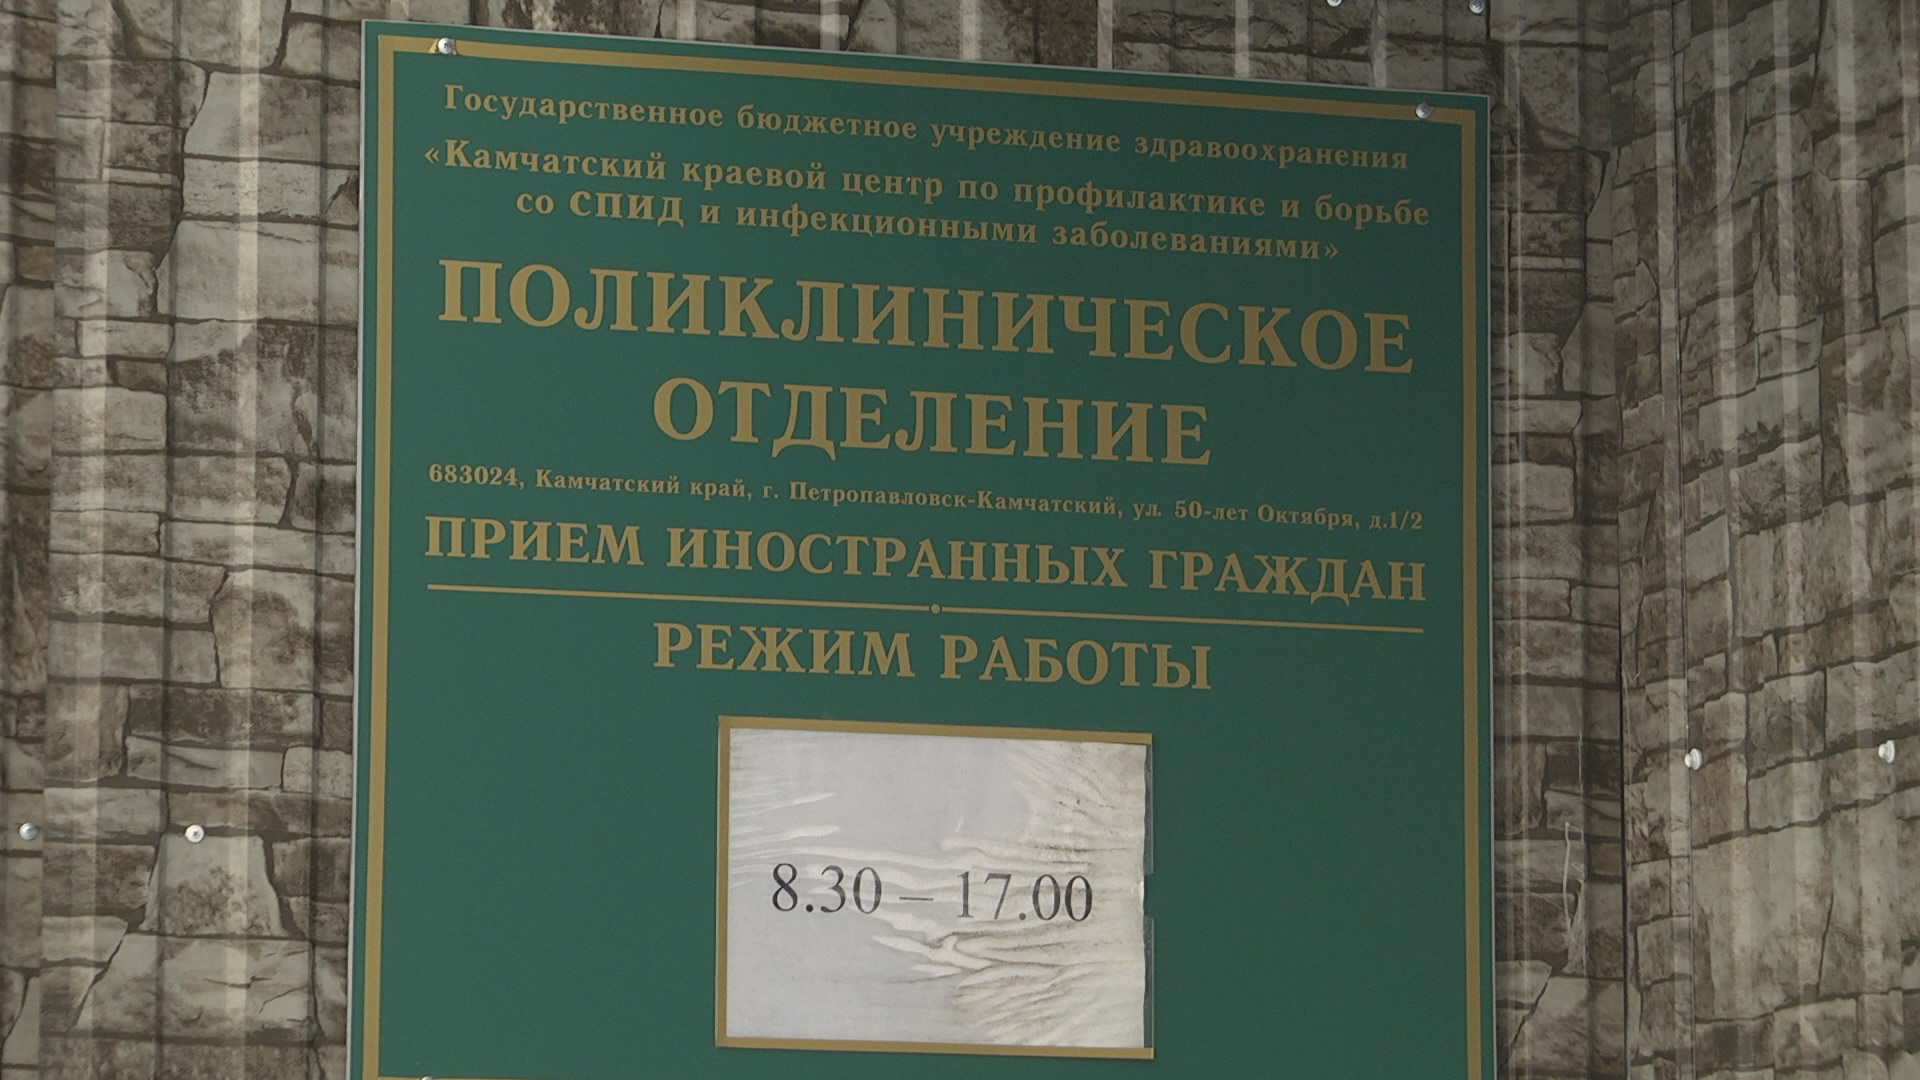 Сайт центра спид спб. ГБУЗ центр СПИД Петропавловск Камчатский. СПИД центр в Петропавловске.